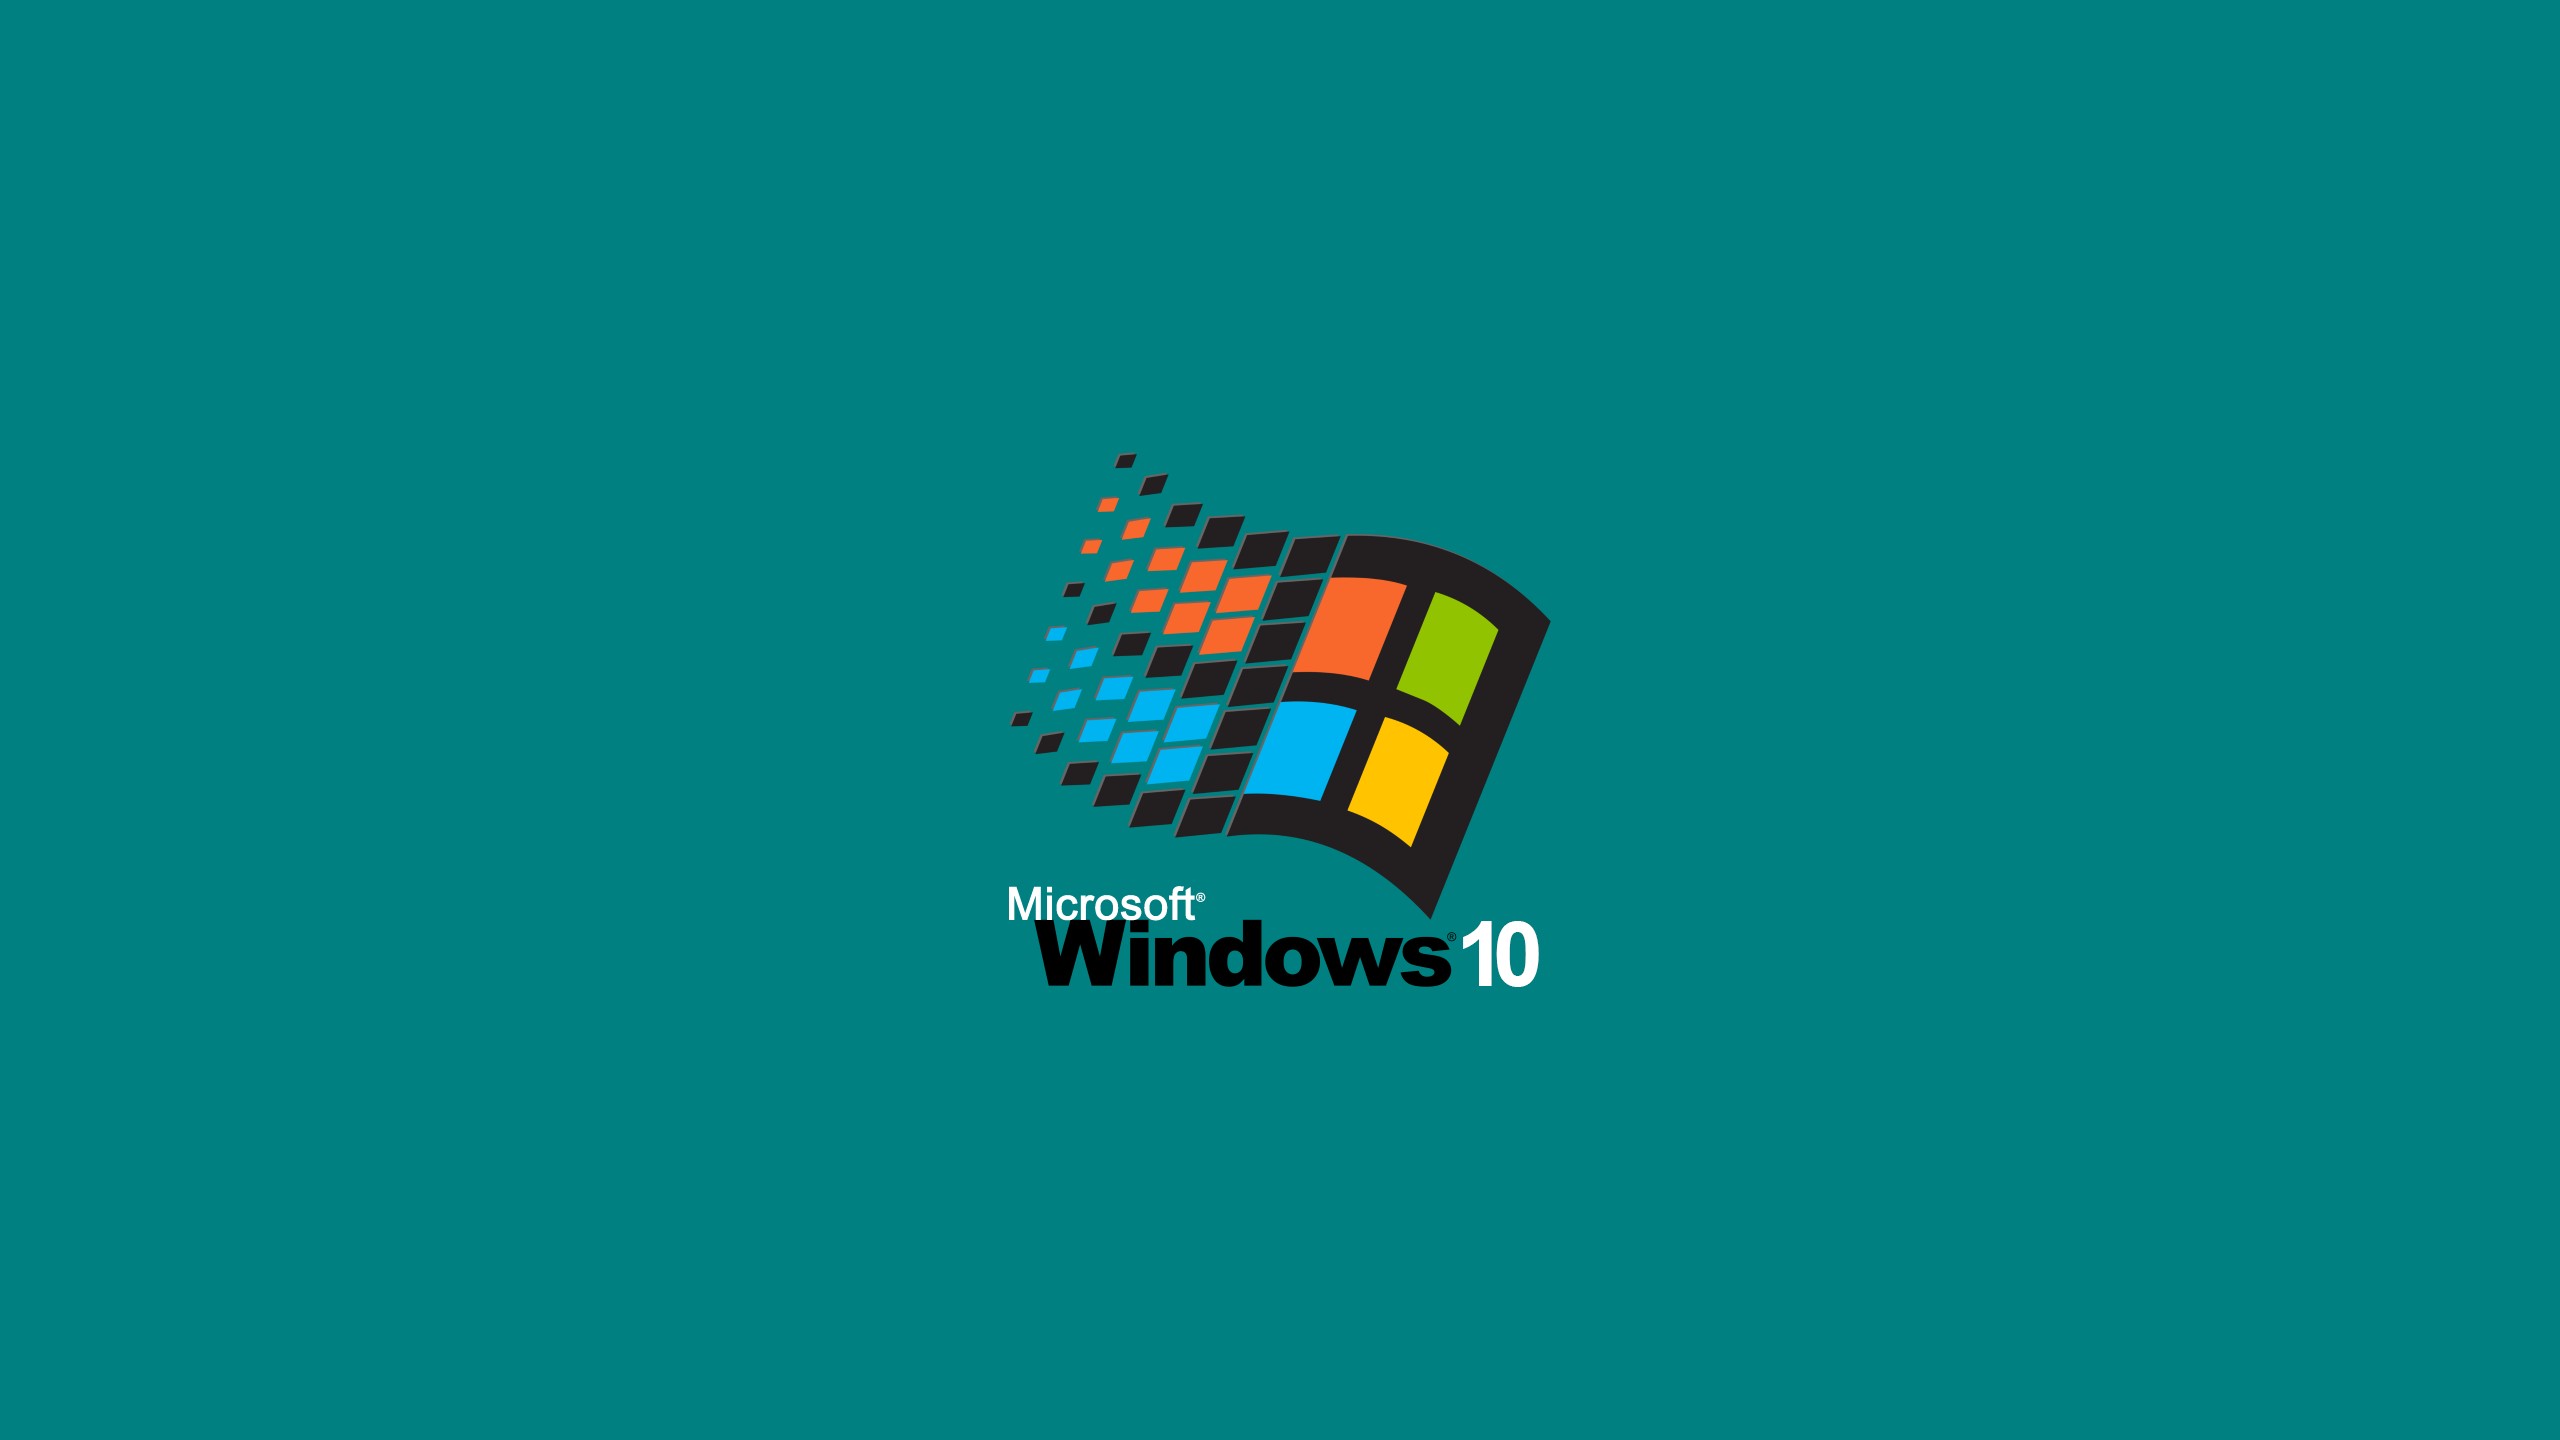 Windows 10 2020 Wallpapers